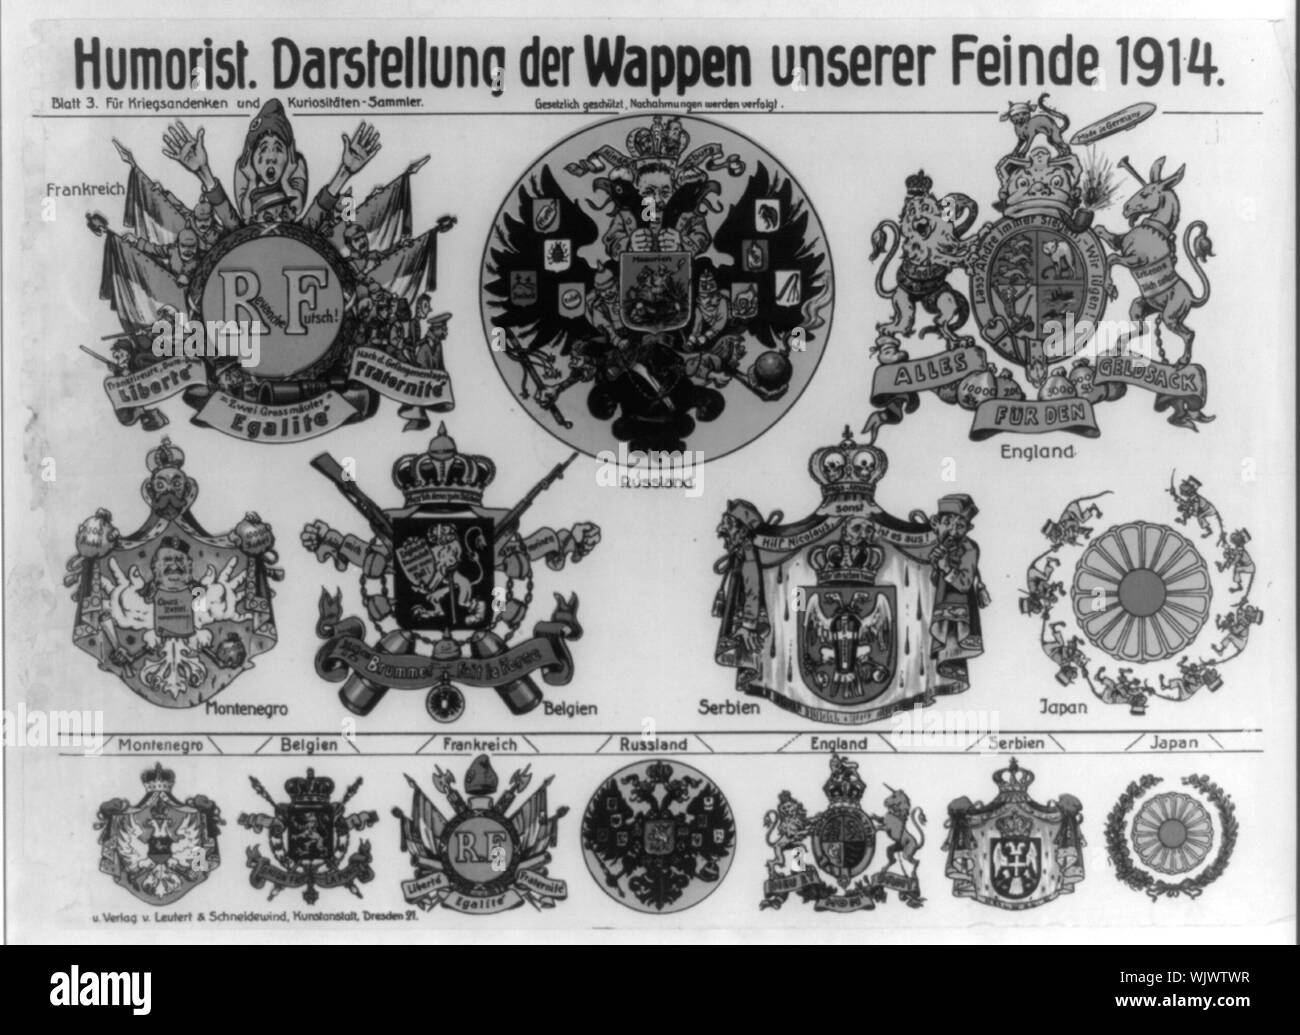 Humorist - Darstellung de Wappen unserer Feinde 1914 Stock Photo